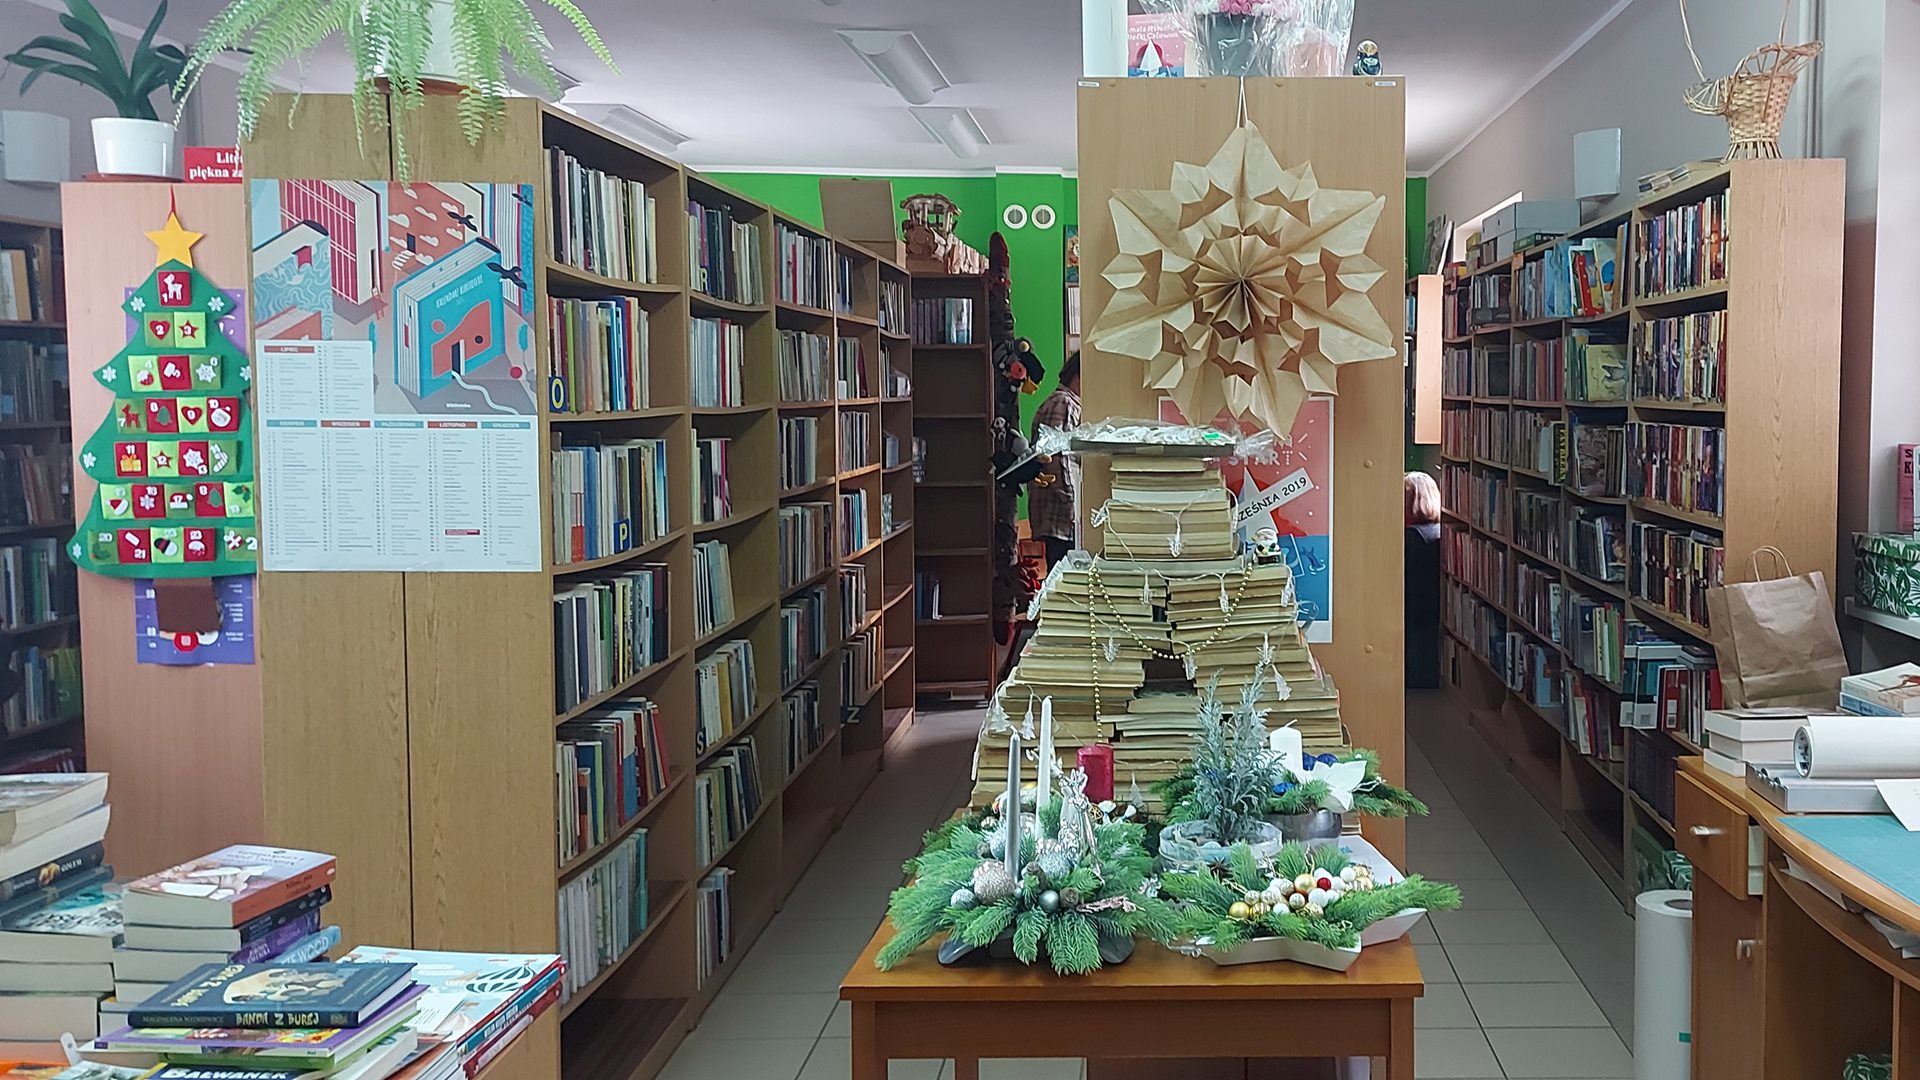 Biblioteka w Boćkach, fot. Dorota Sokołowska